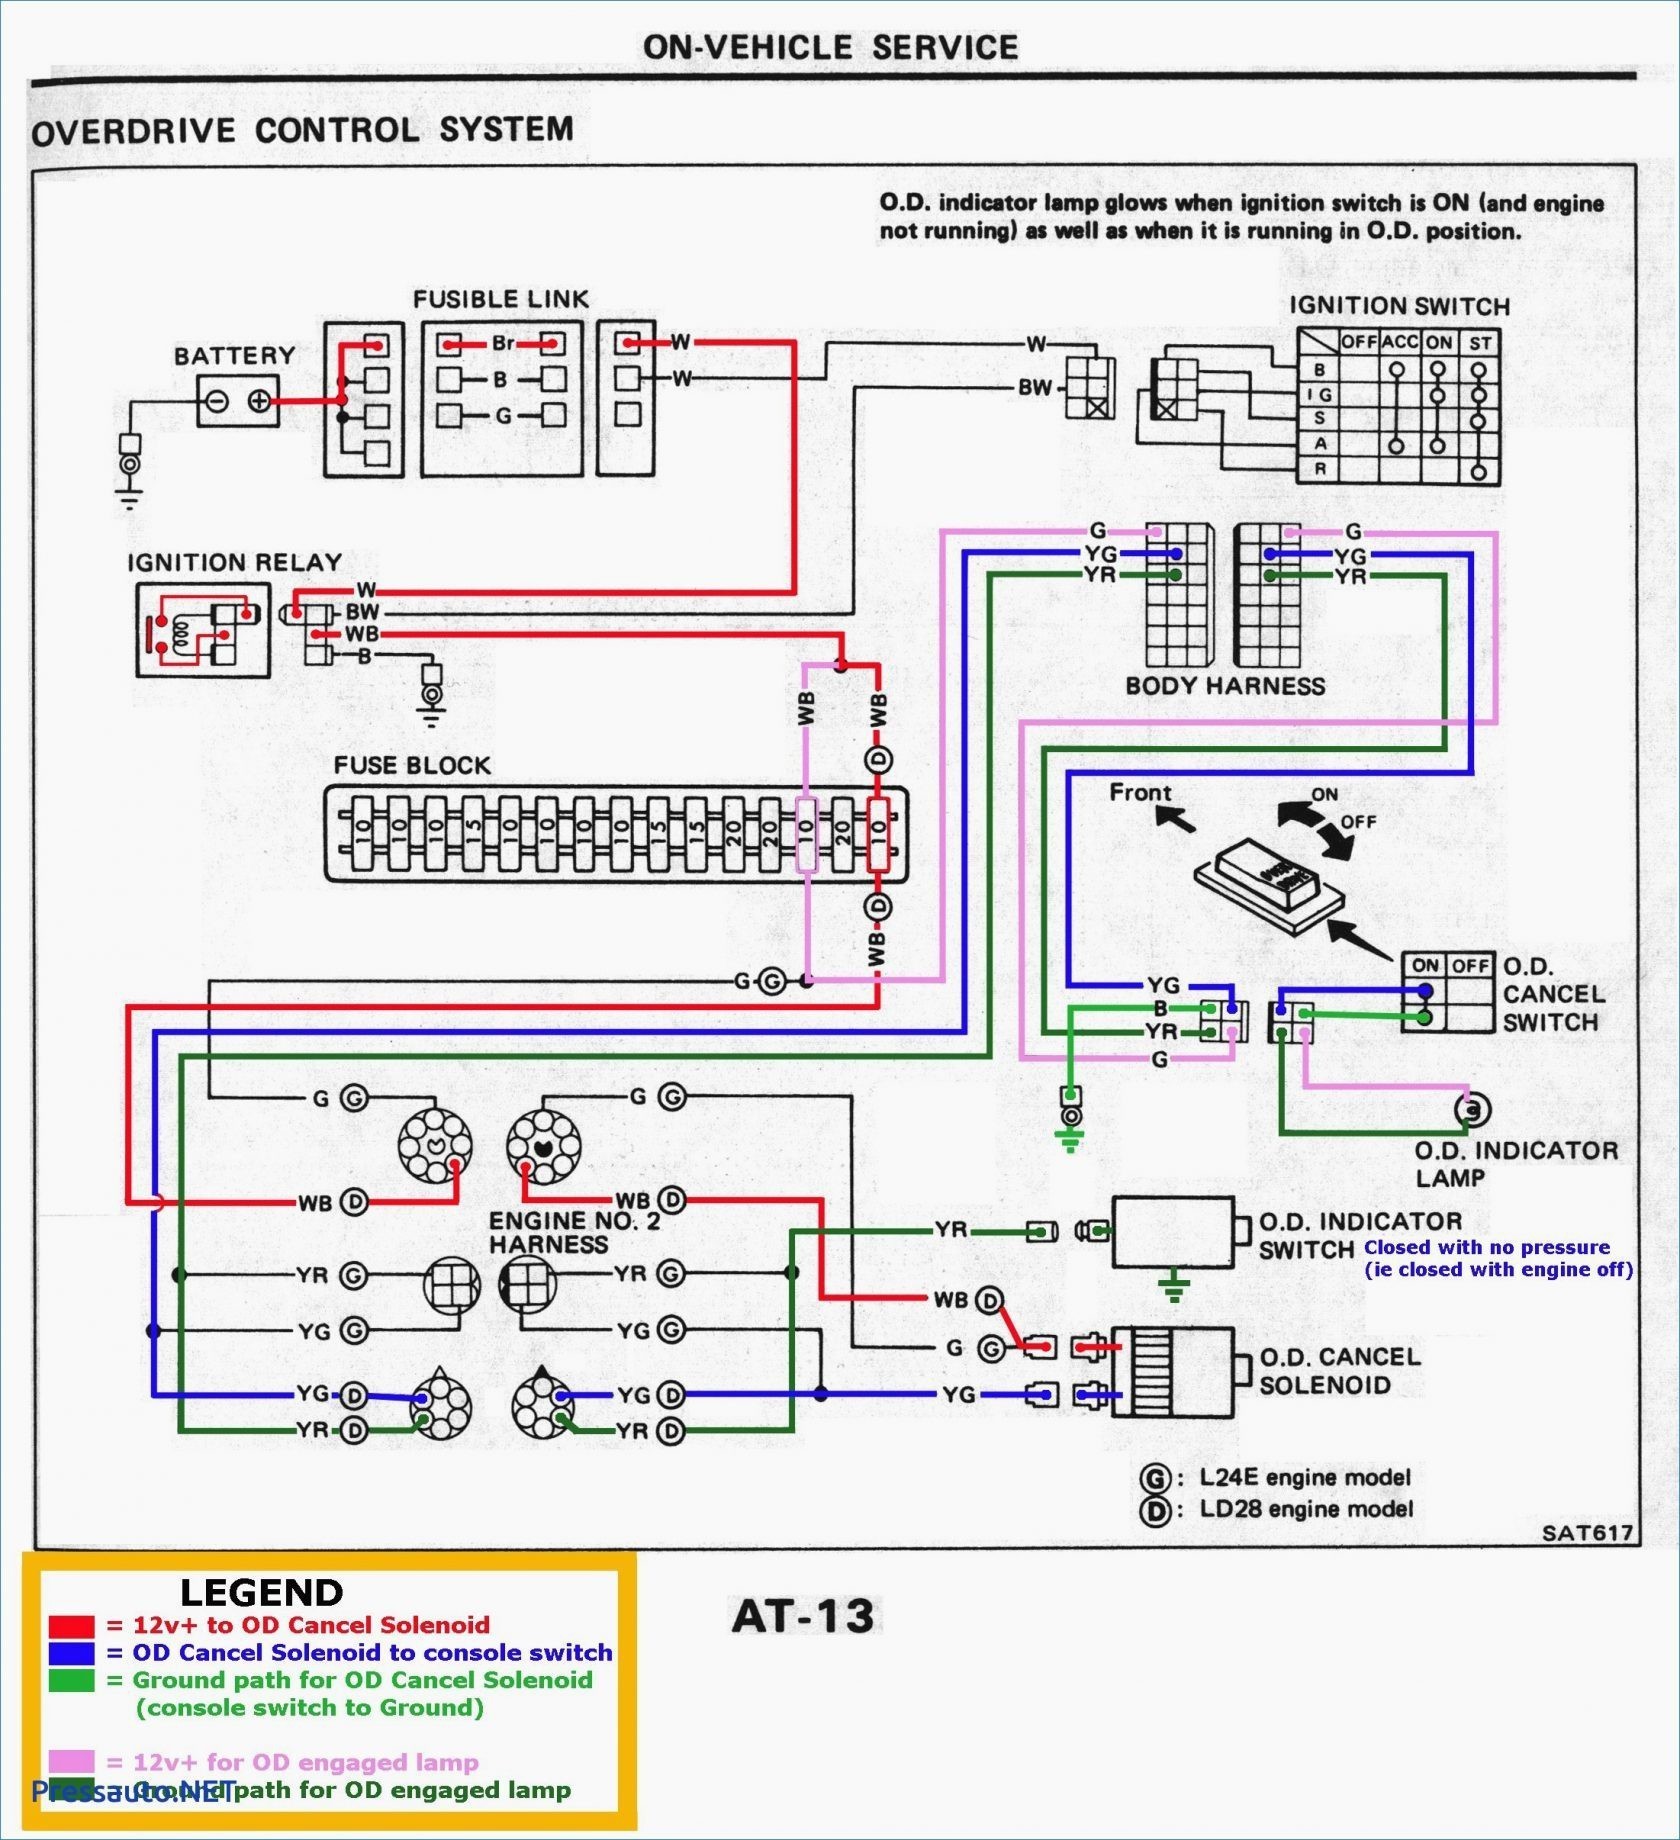 Factory Wiring Diagrams Car Audio ford Wiring Diagram Radio Amplifiers Of Factory Wiring Diagrams Car Audio